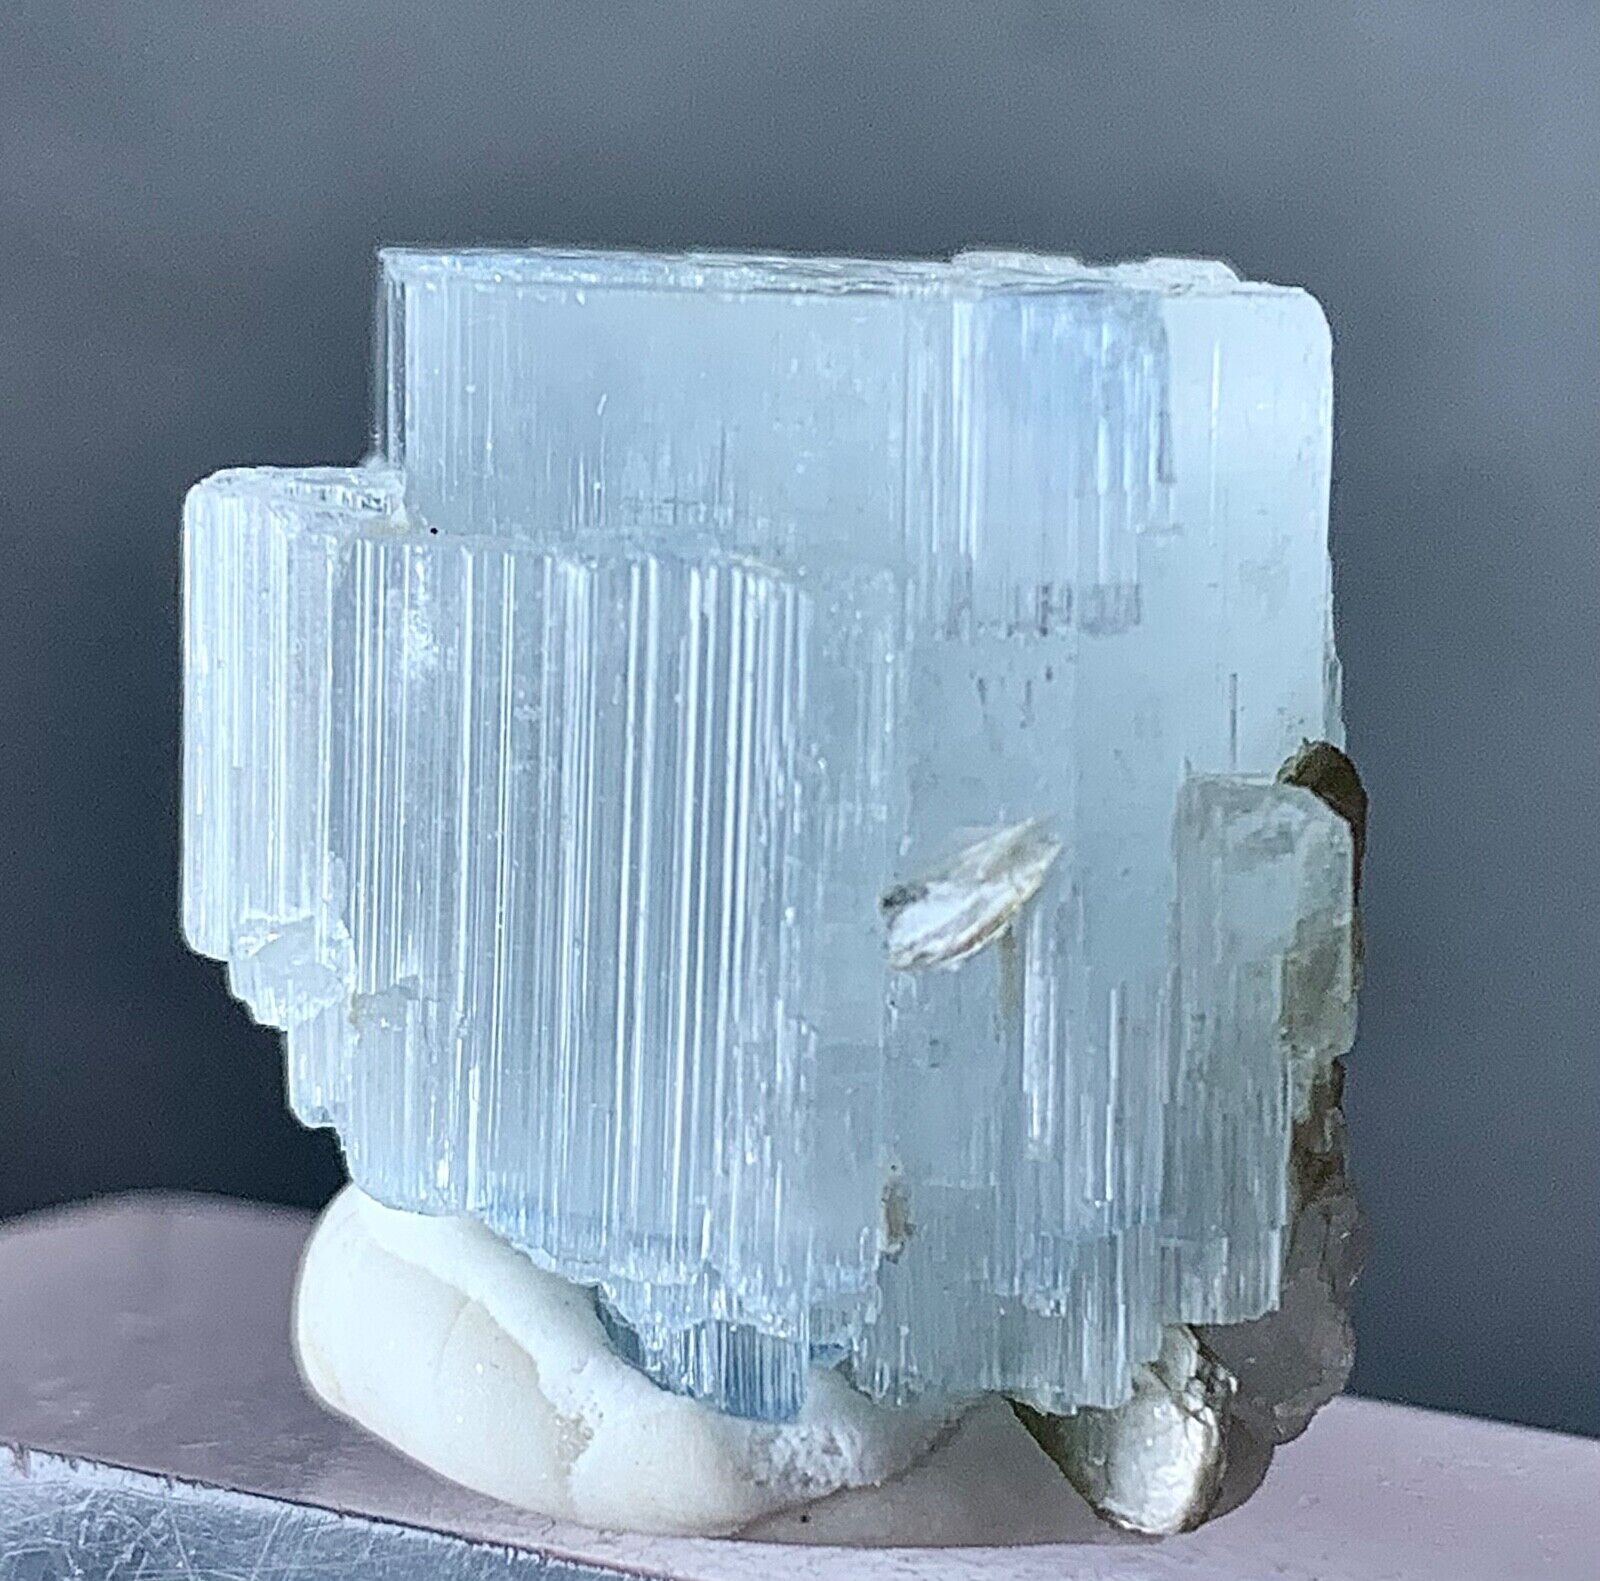 50 Carat Aquamarine Crystal From Skardu Pakistan